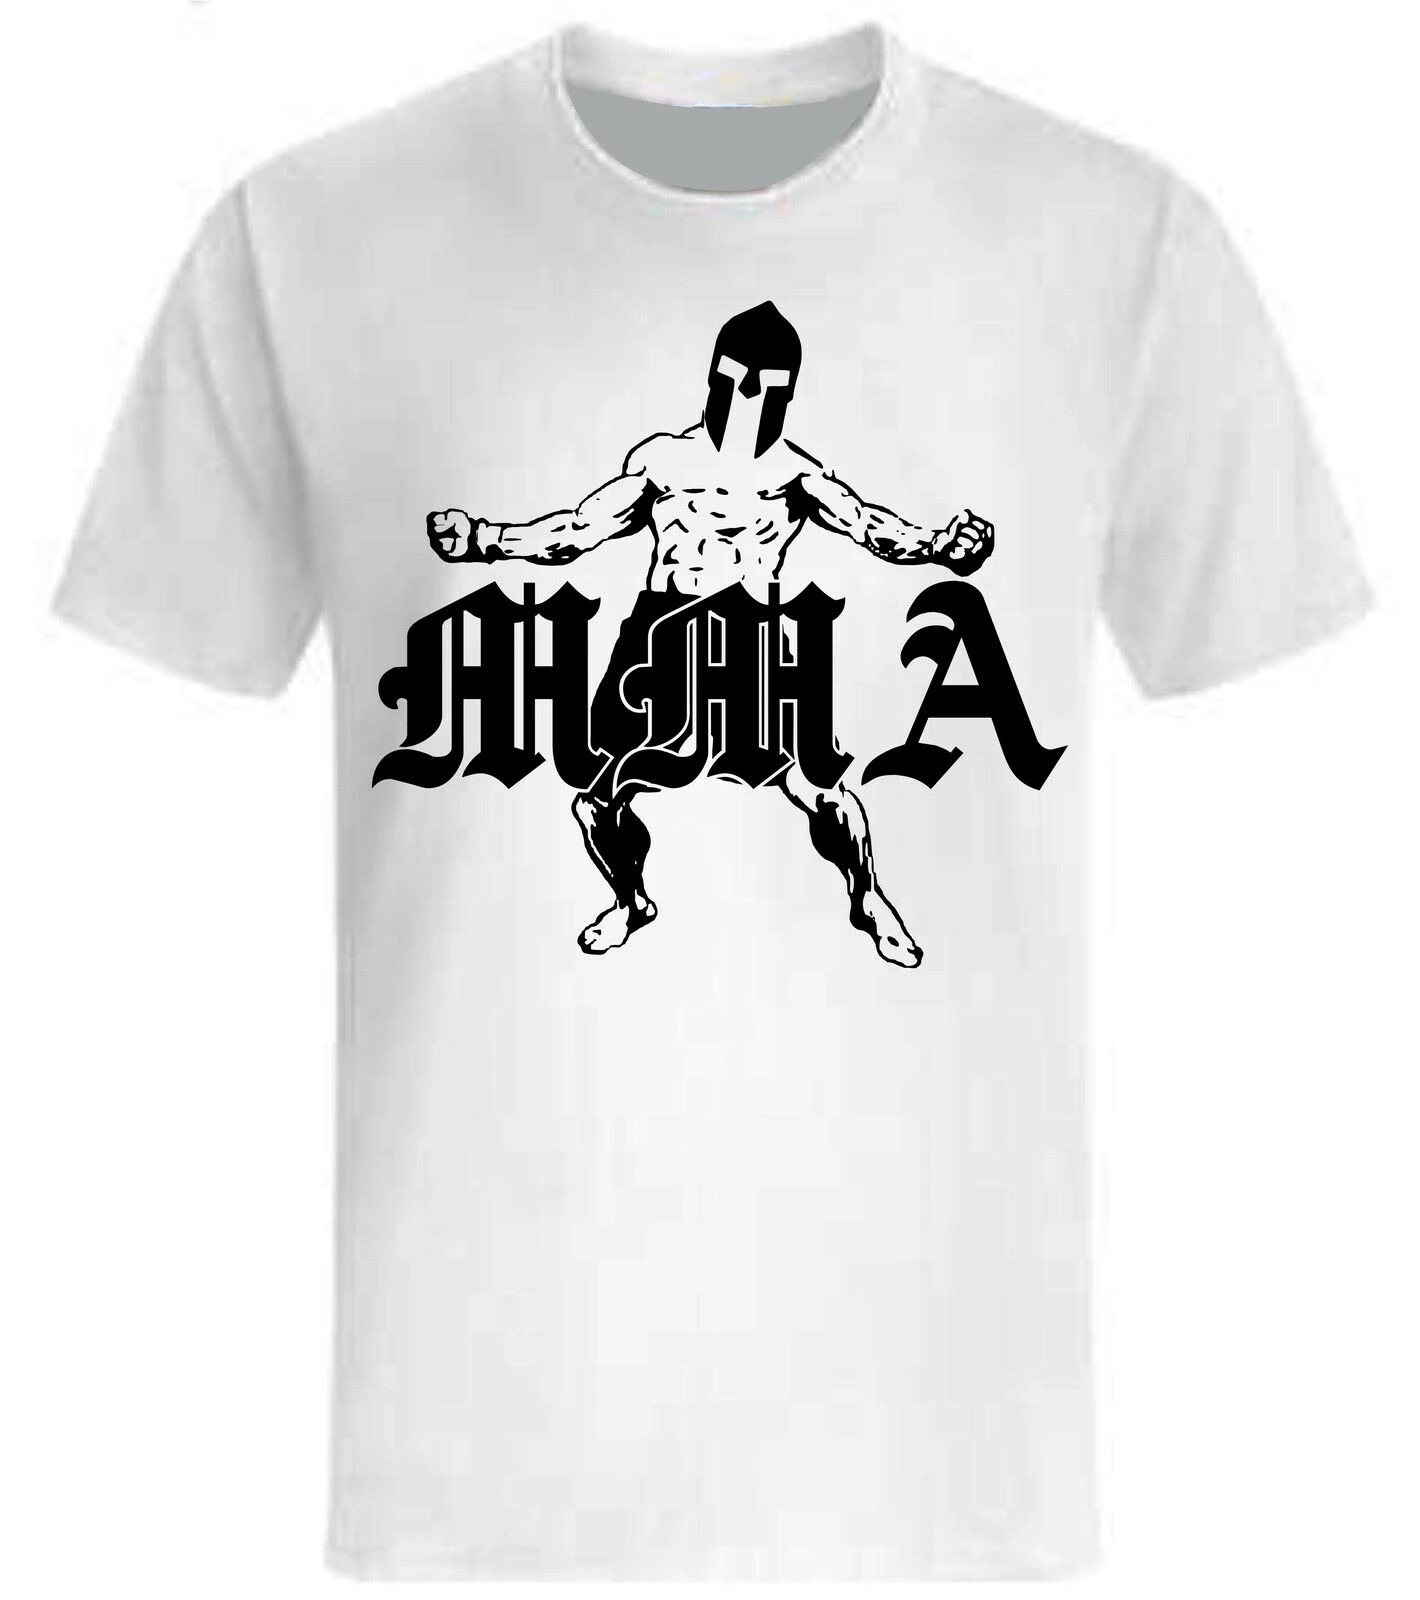 

Funny Sparta MMA Criminal Boxen Muay Thai Kickboxen Fight BJJ Ringer Men's 100% Cotton Casual T-shirts Loose Top Size S-3XL